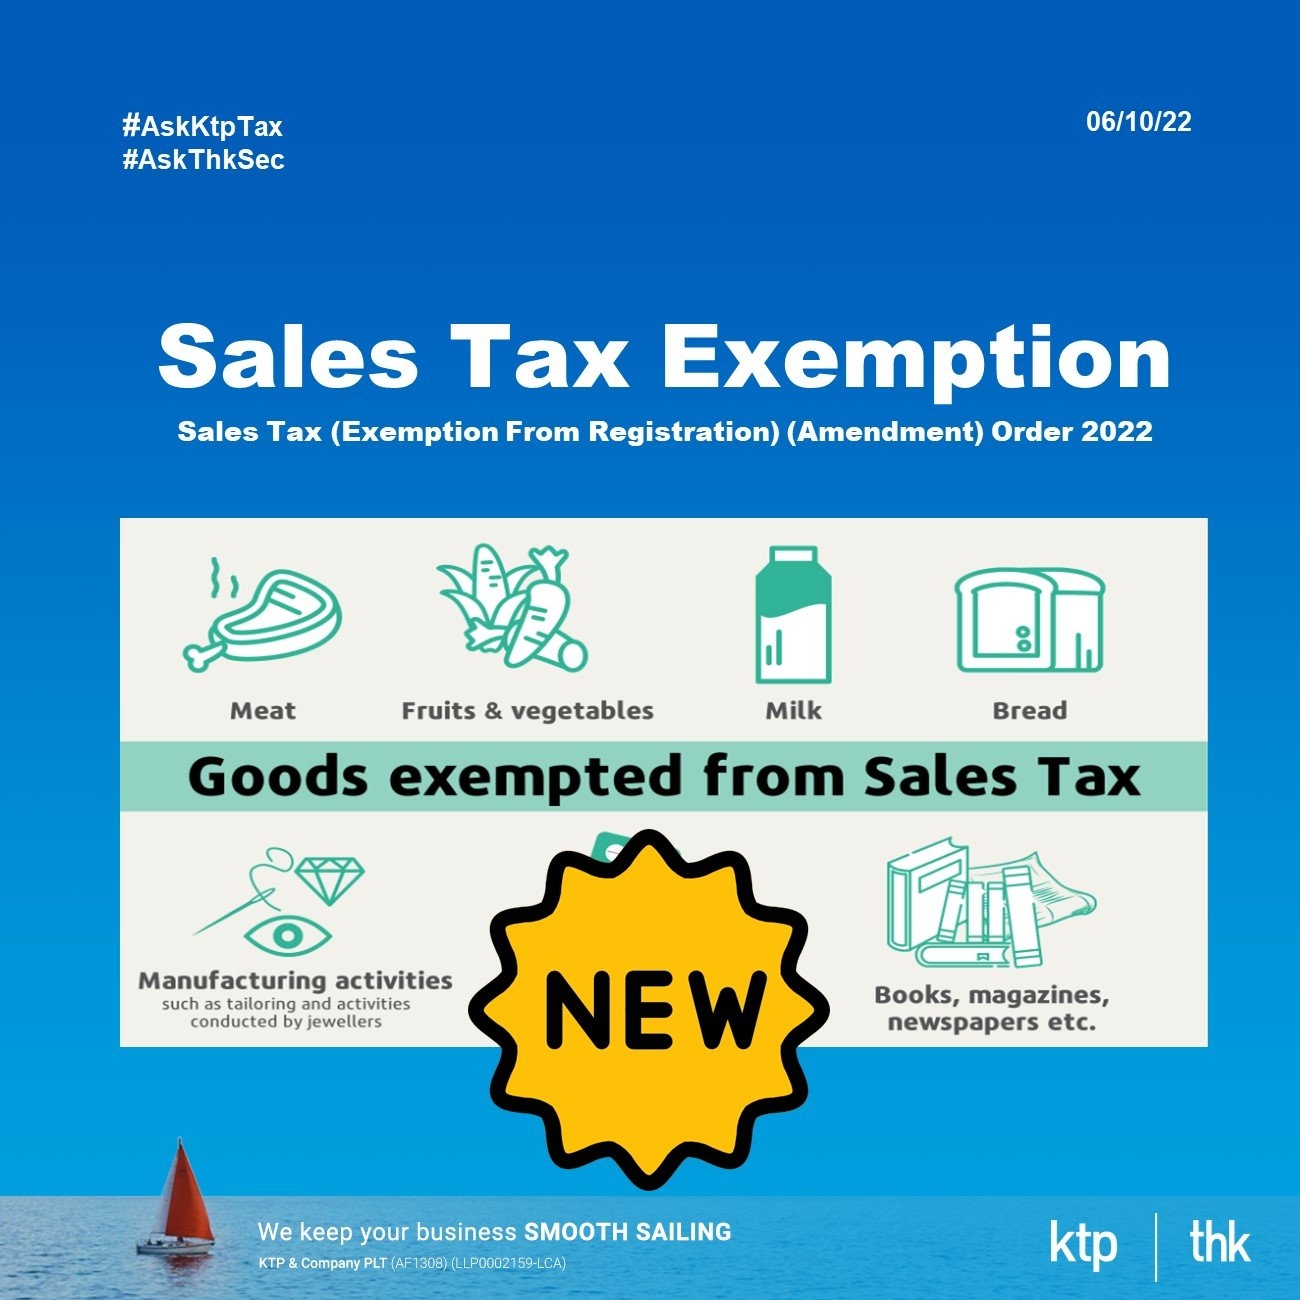 sales-tax-exemption-from-registration-amendment-order-2022-oct-06